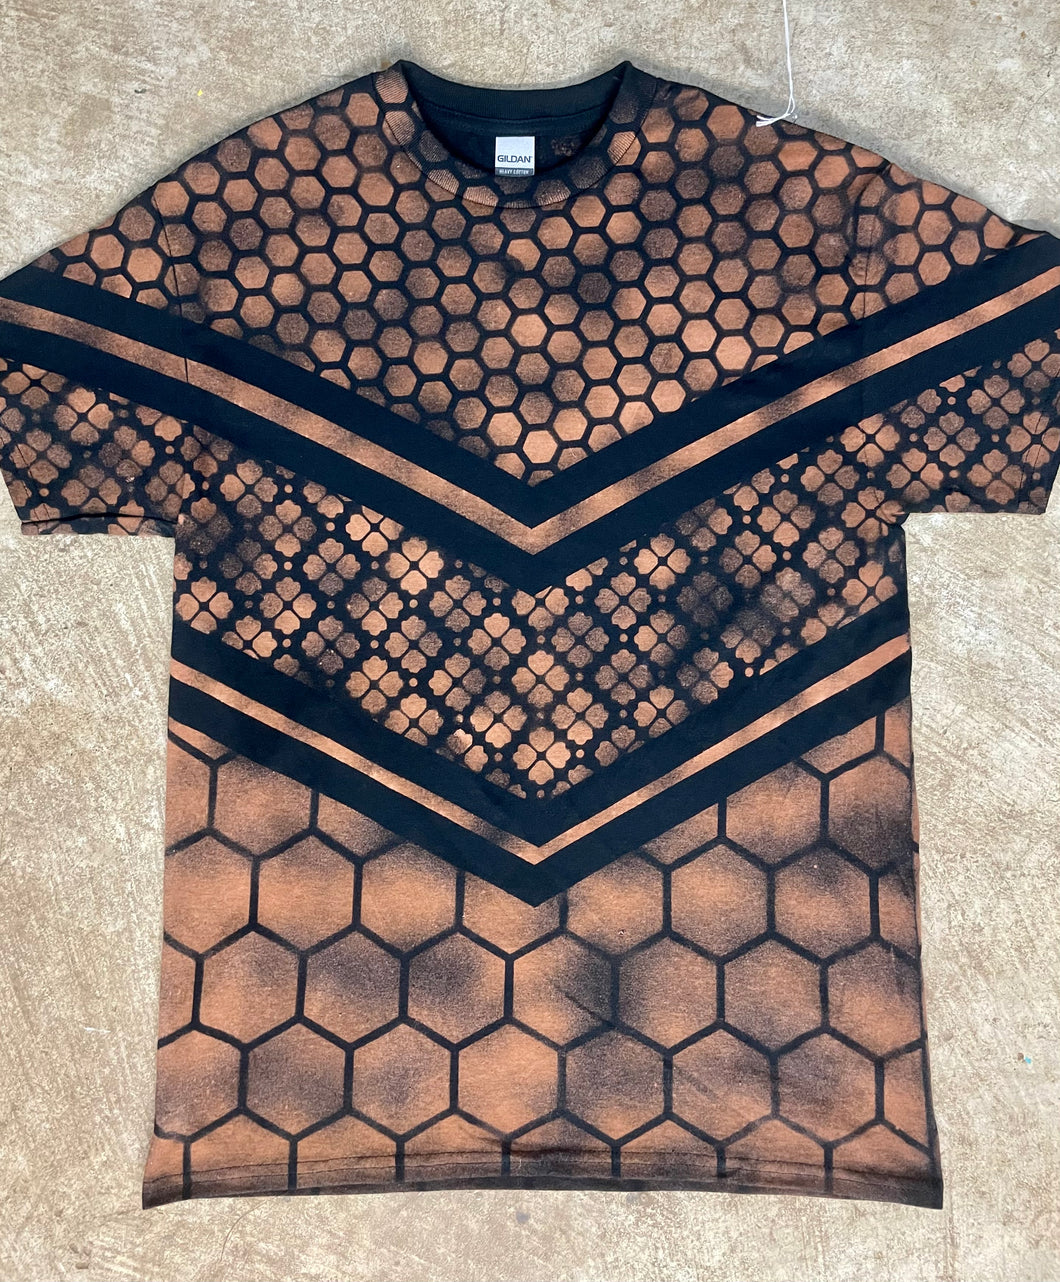 Honeycomb+Clover tshirt